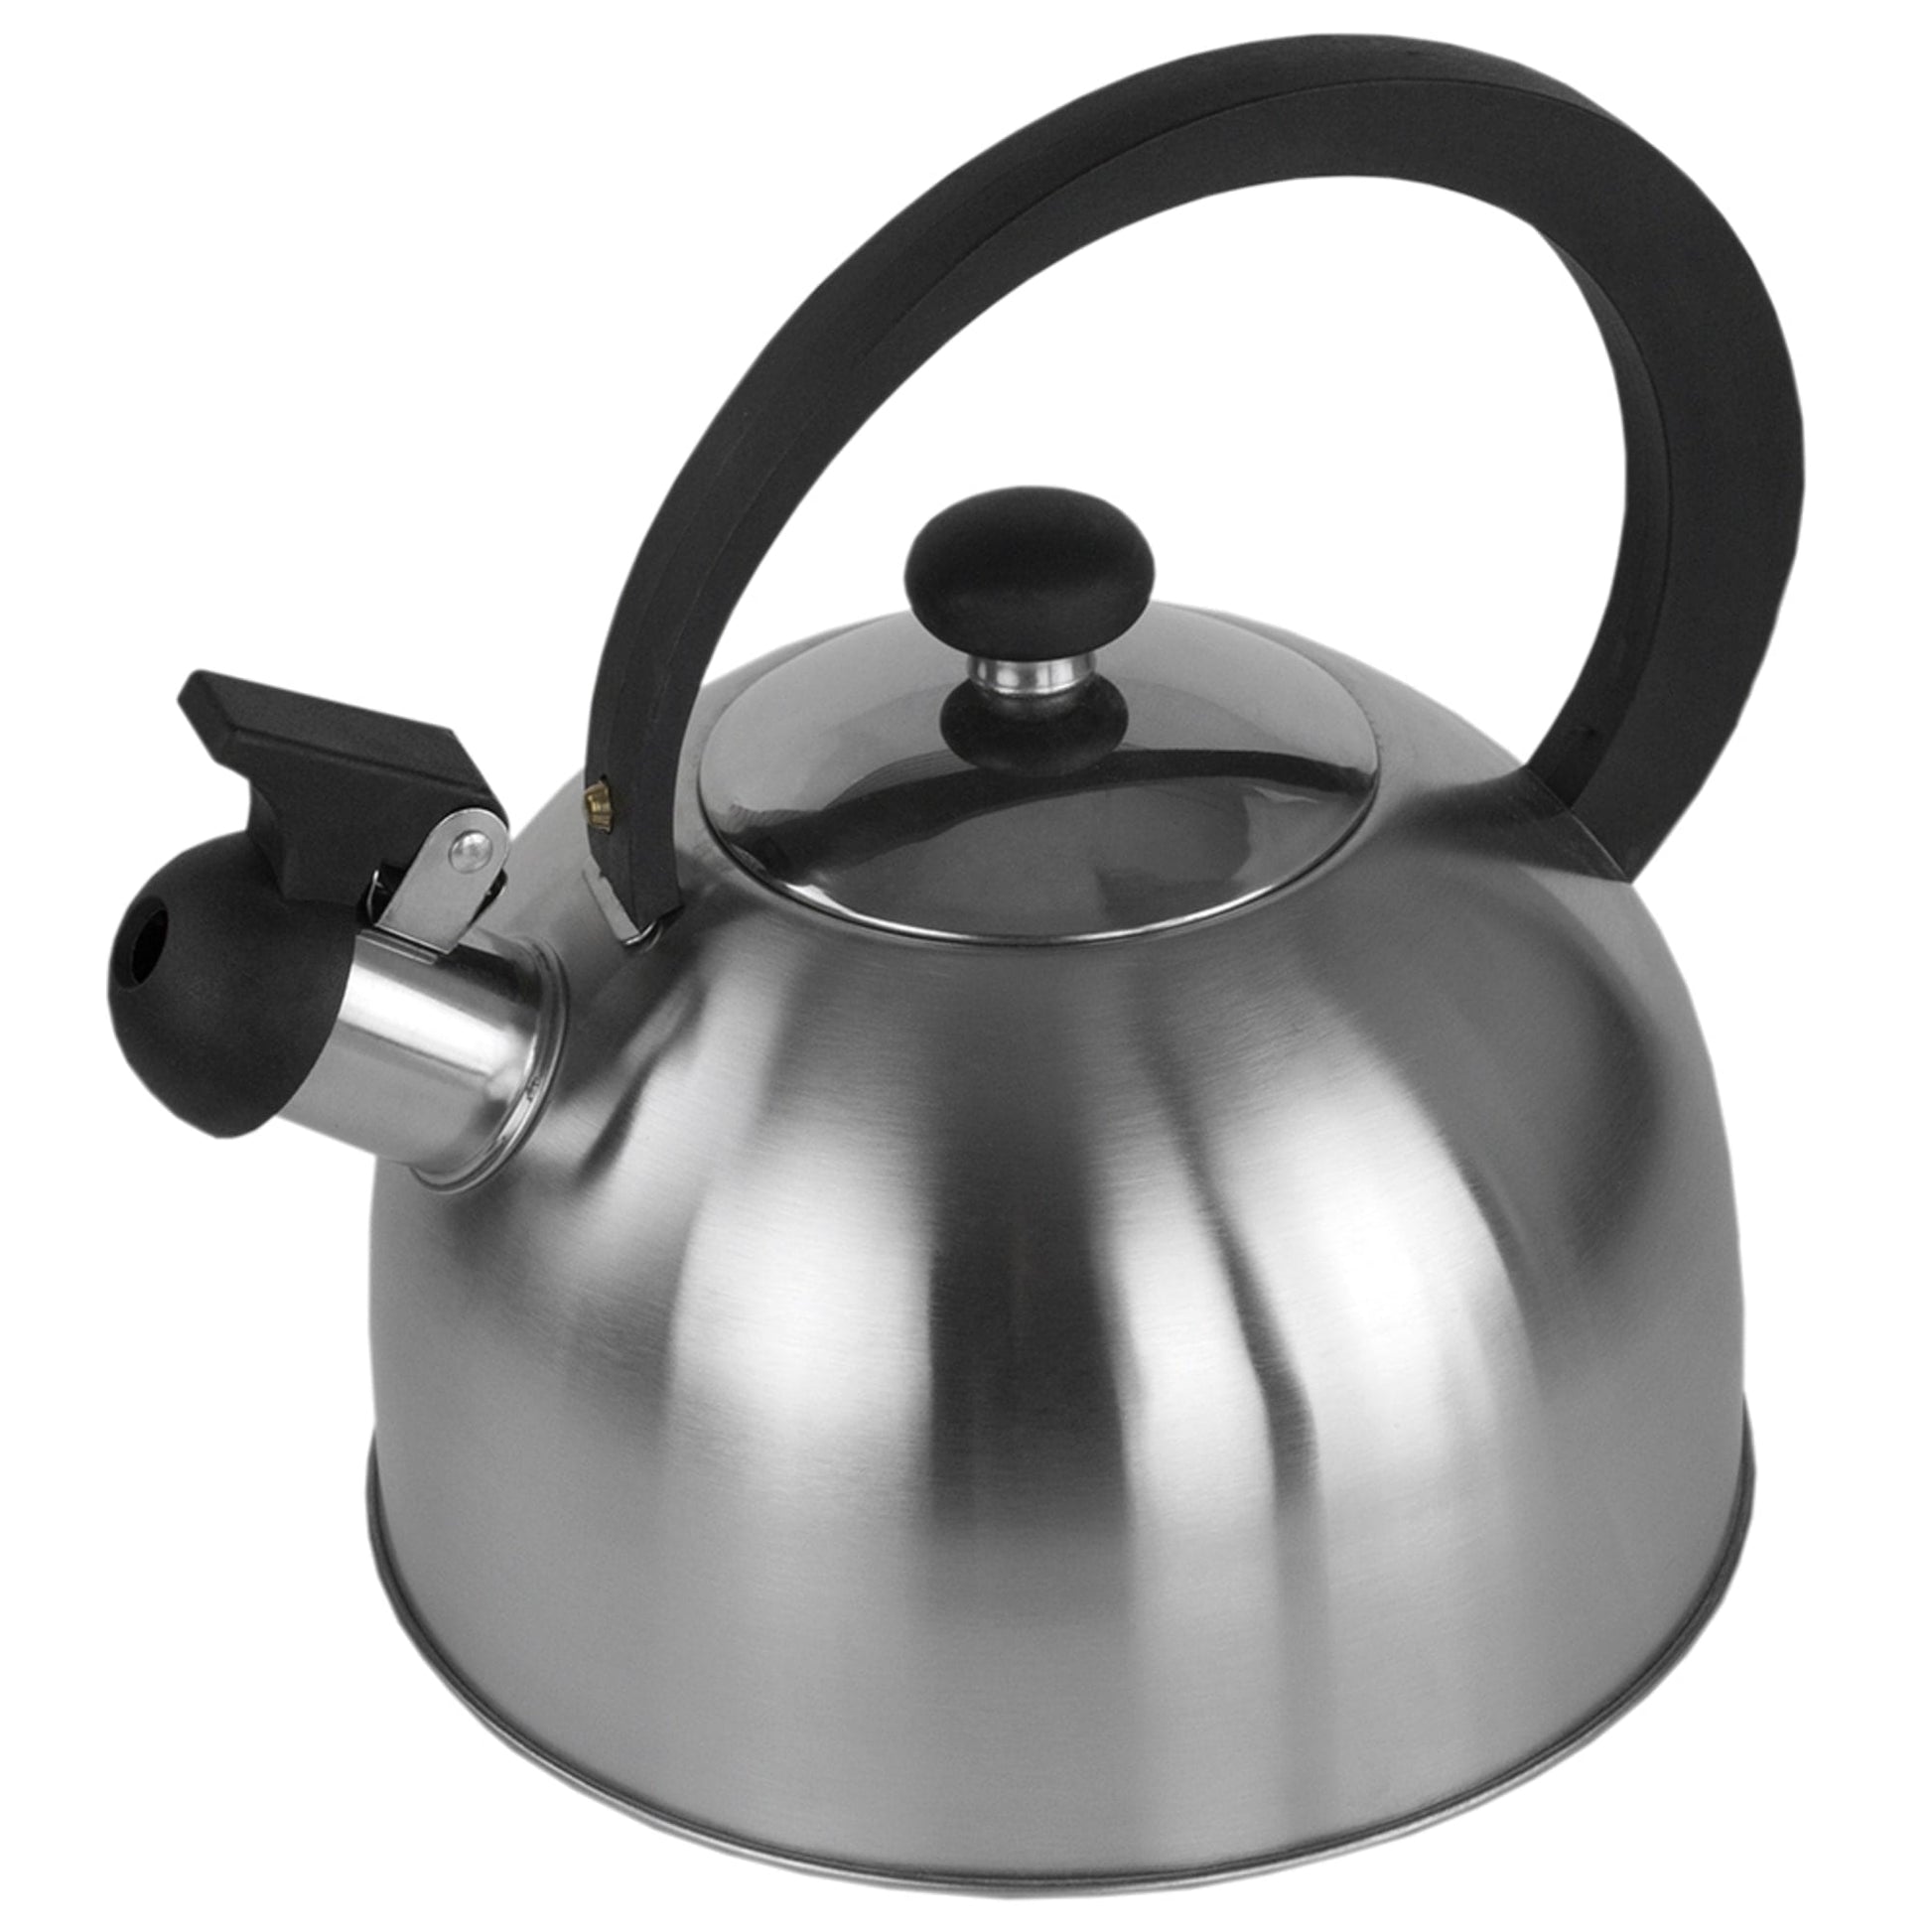 Basics Stainless Steel Tea Kettle, 2.4-Quart, Teal